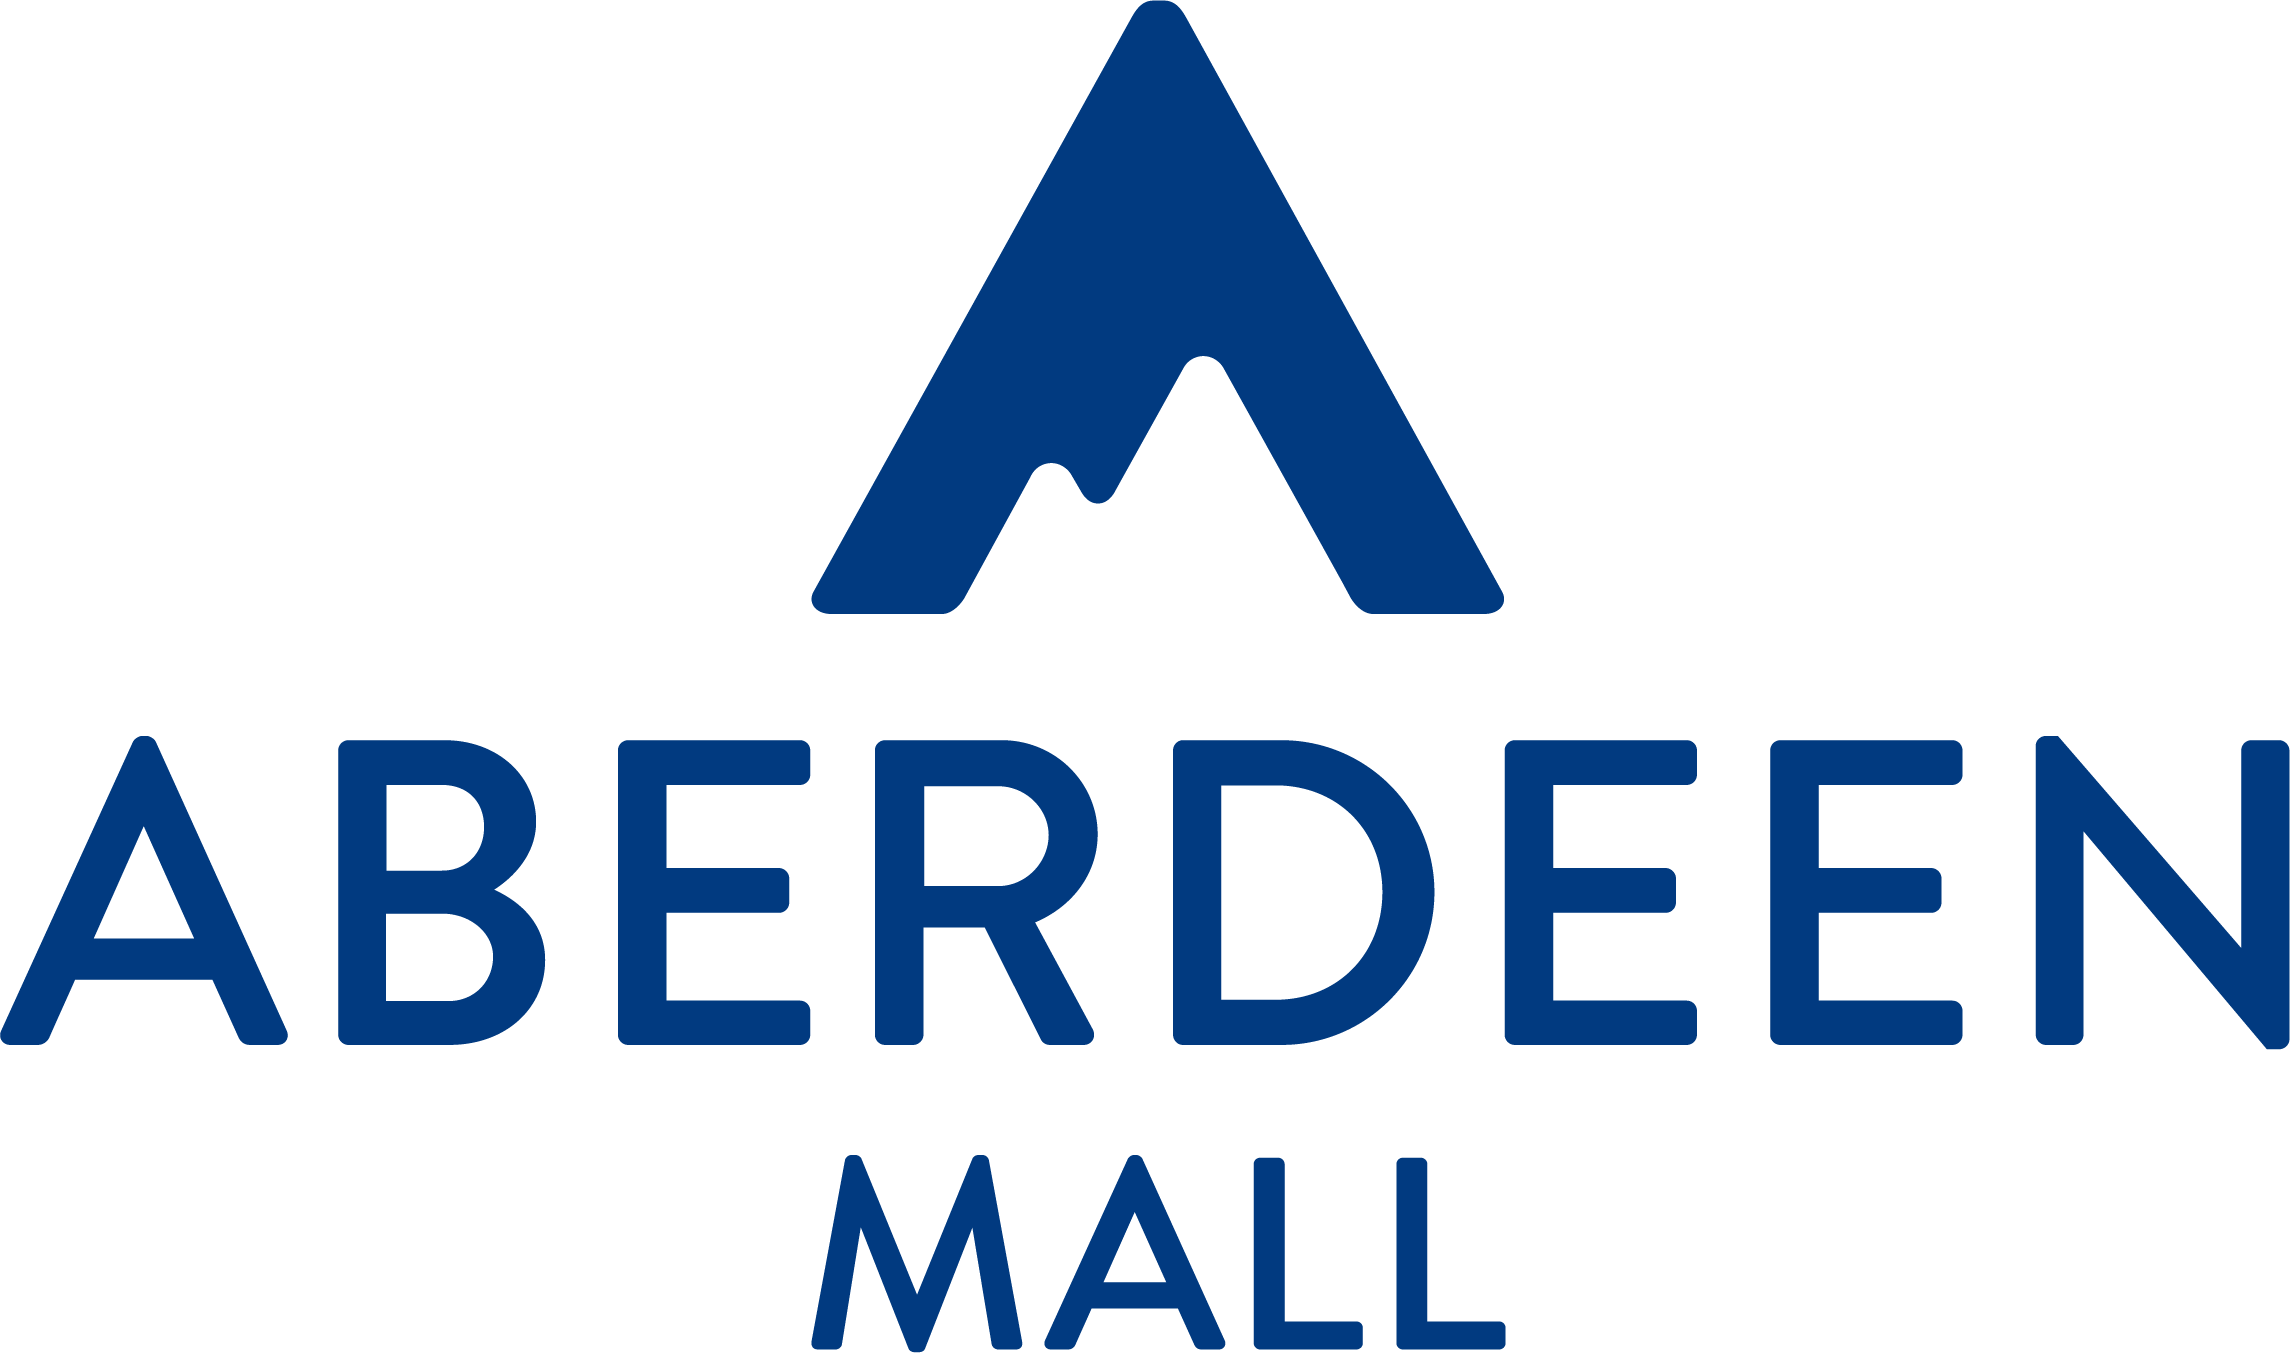 aberdeen mall travel agency